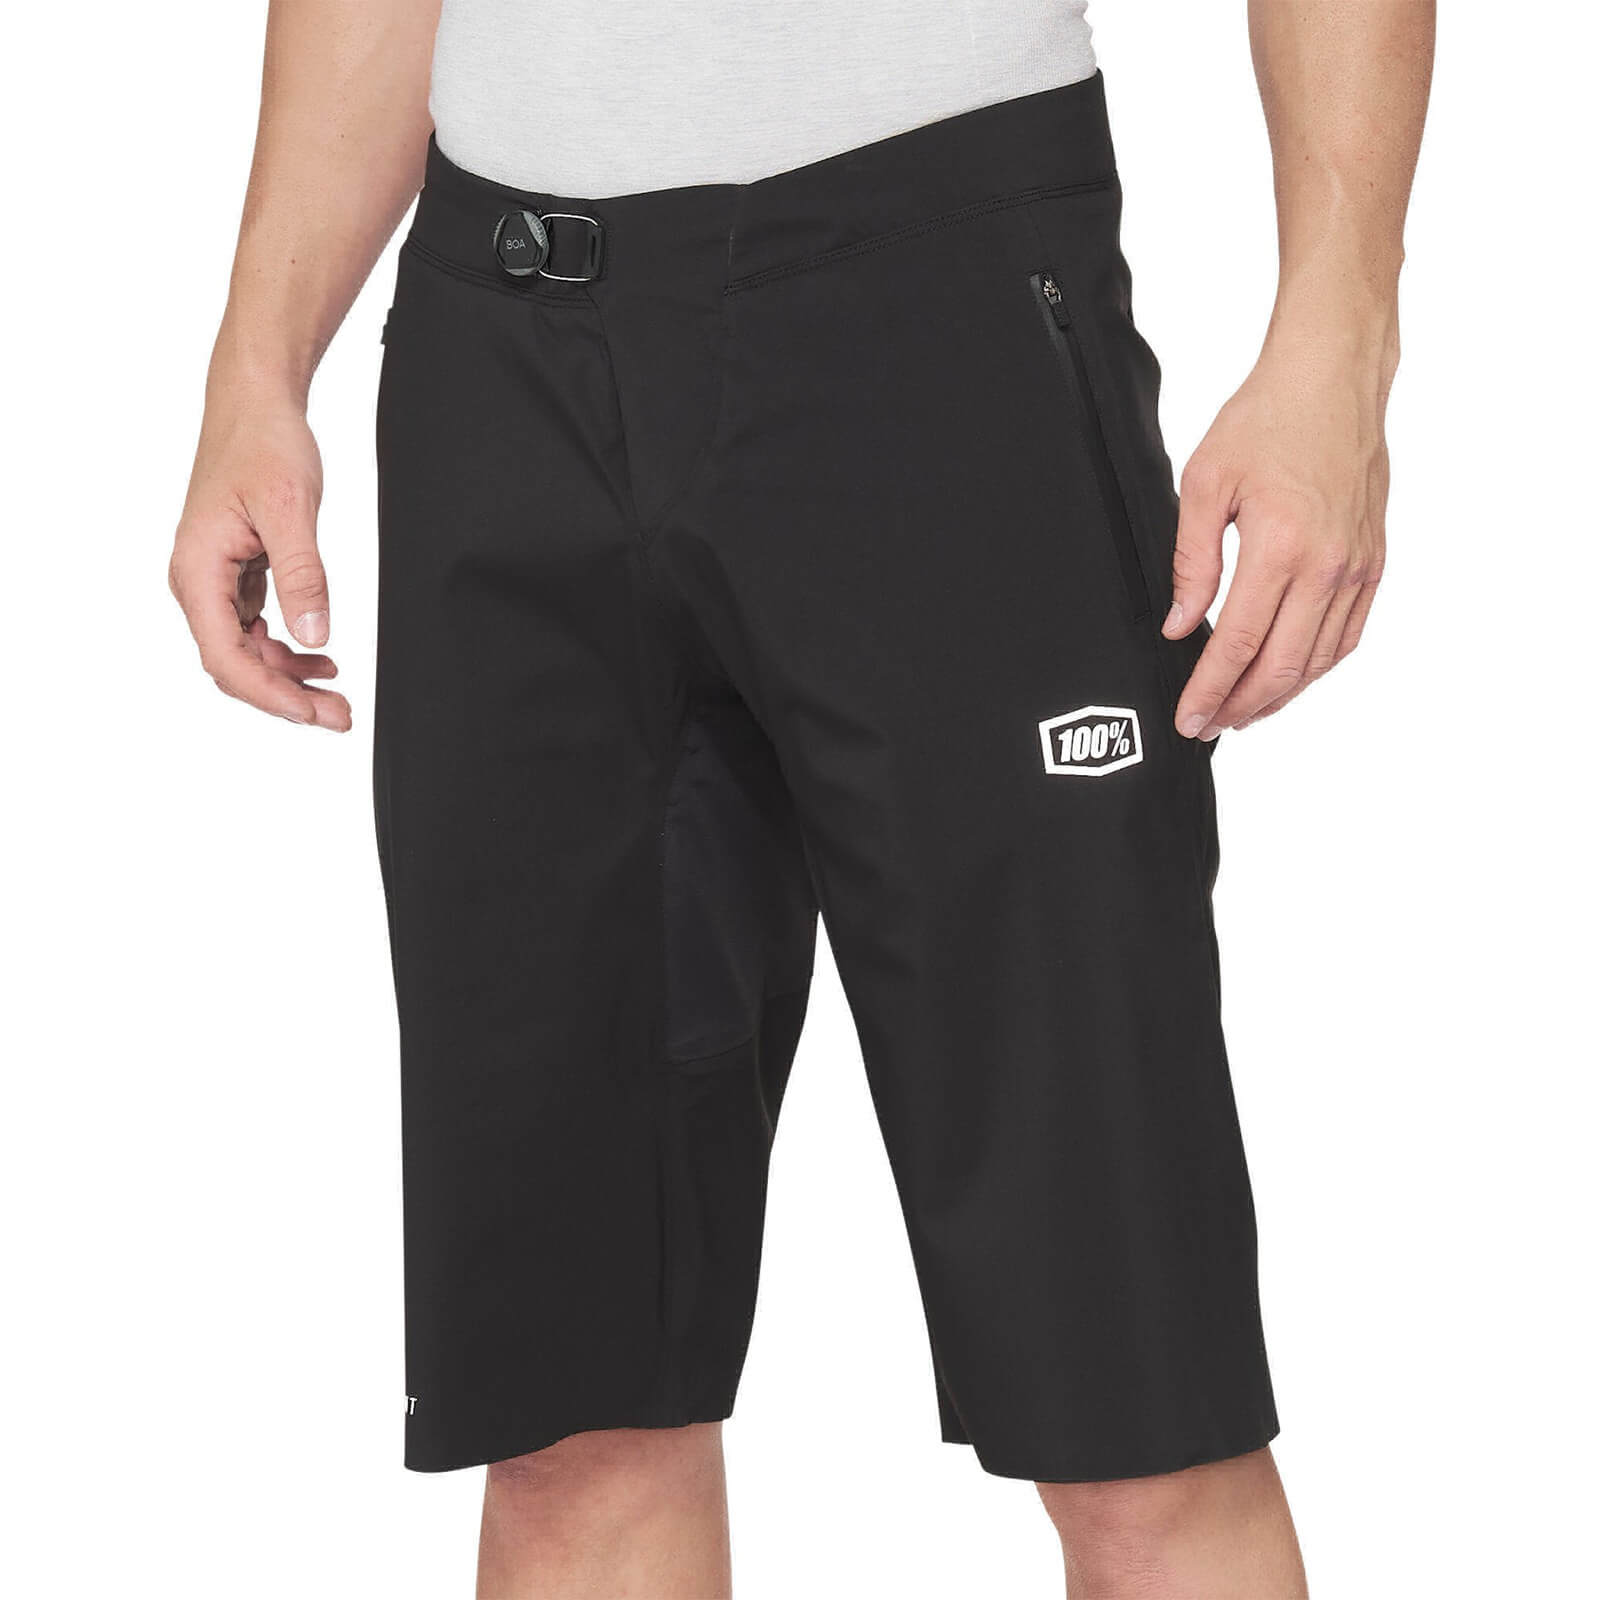 100% Hydromatic MTB Shorts - 38